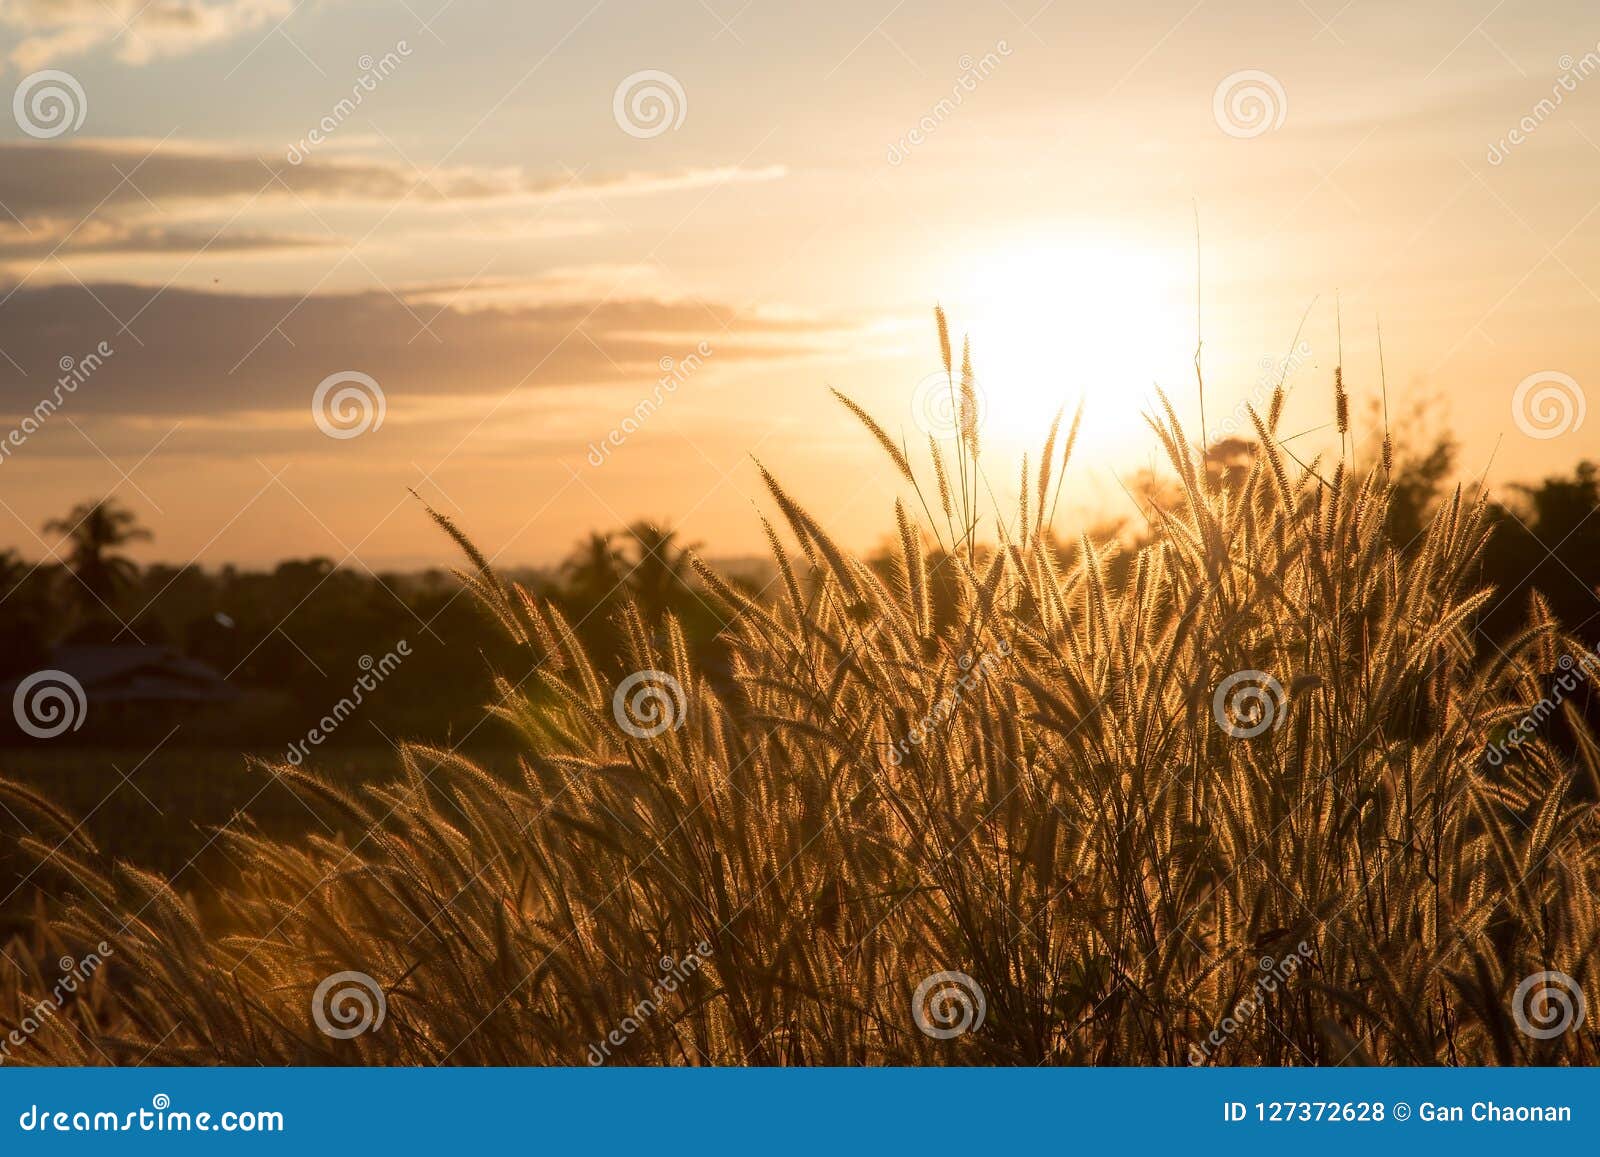 Golden Grass, Sunset Background. Stock Photo - Image of morning